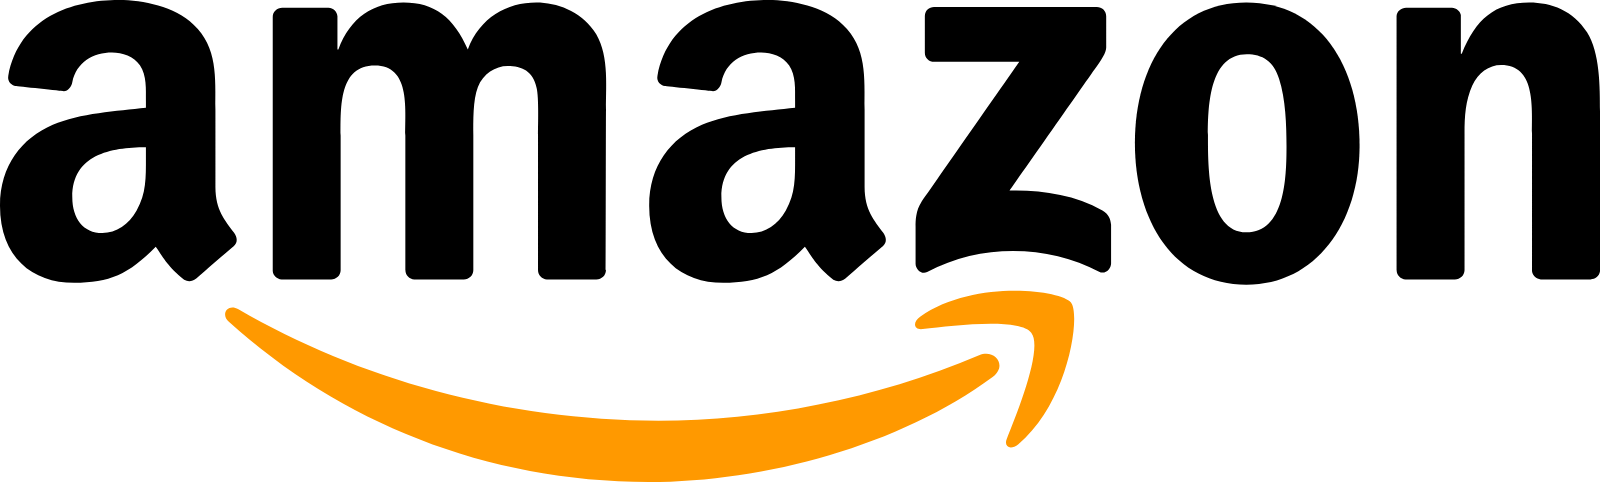 Amazon logo large (transparent PNG)